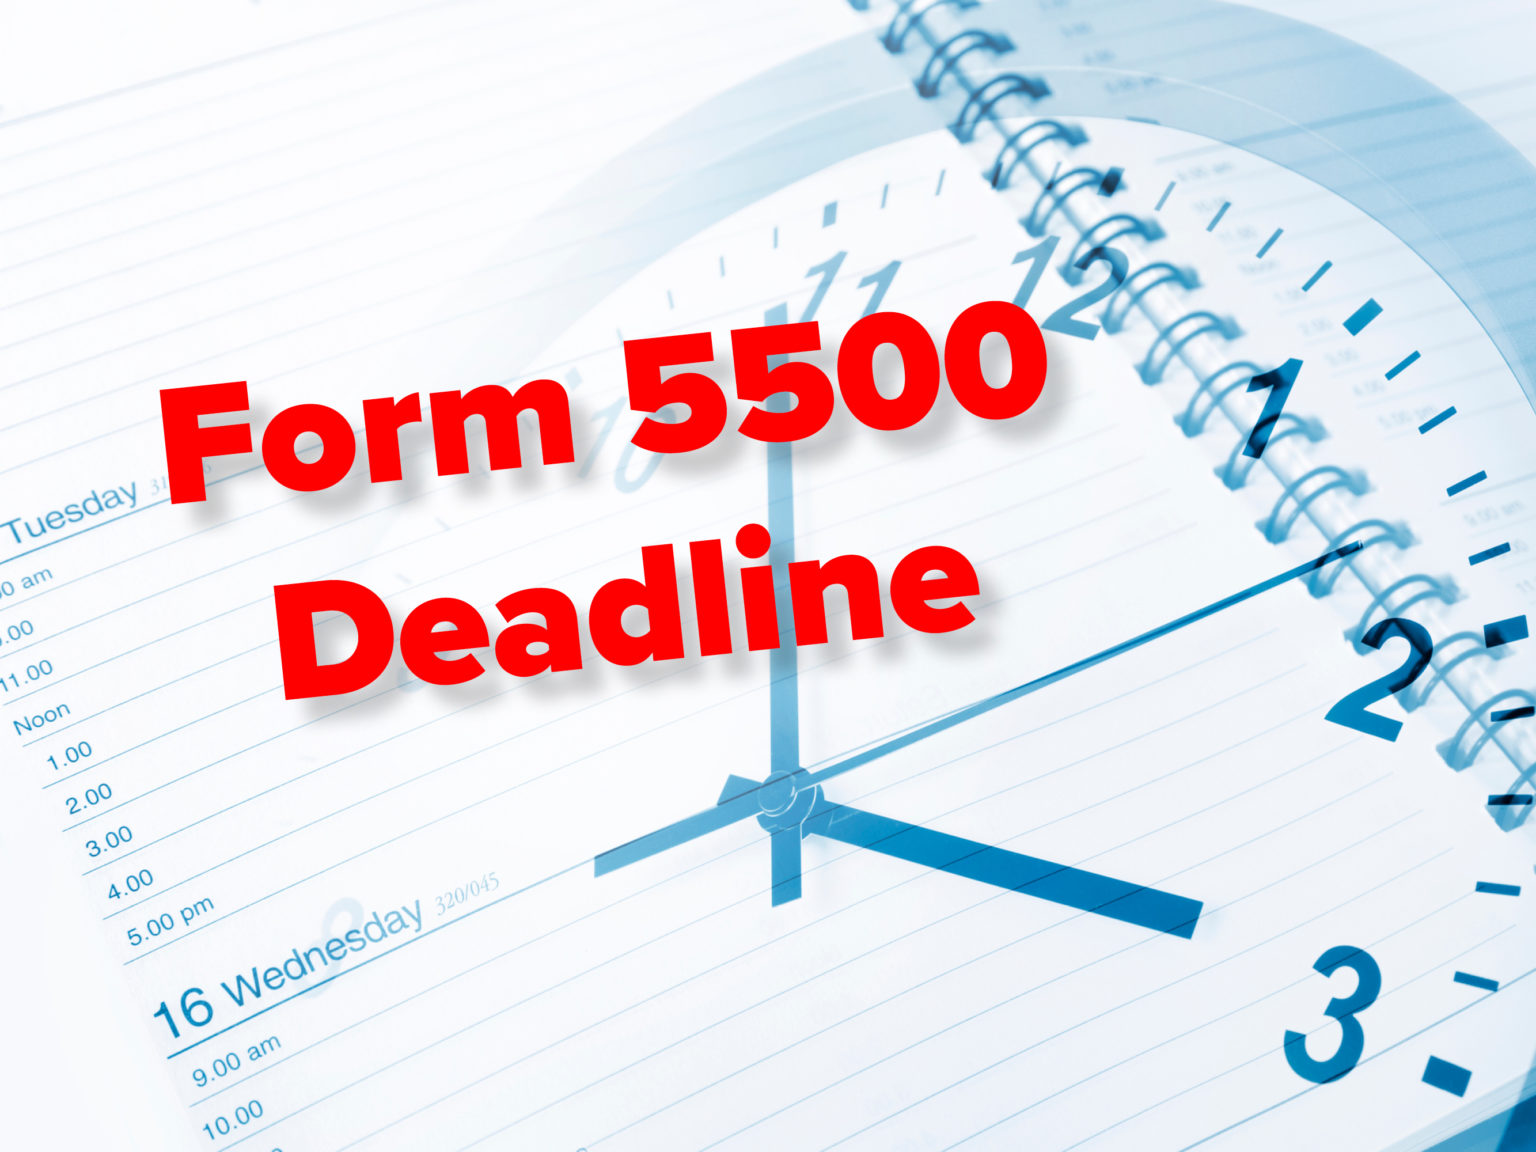 Form 5500 Deadline Coming Up In August! MyHRConcierge